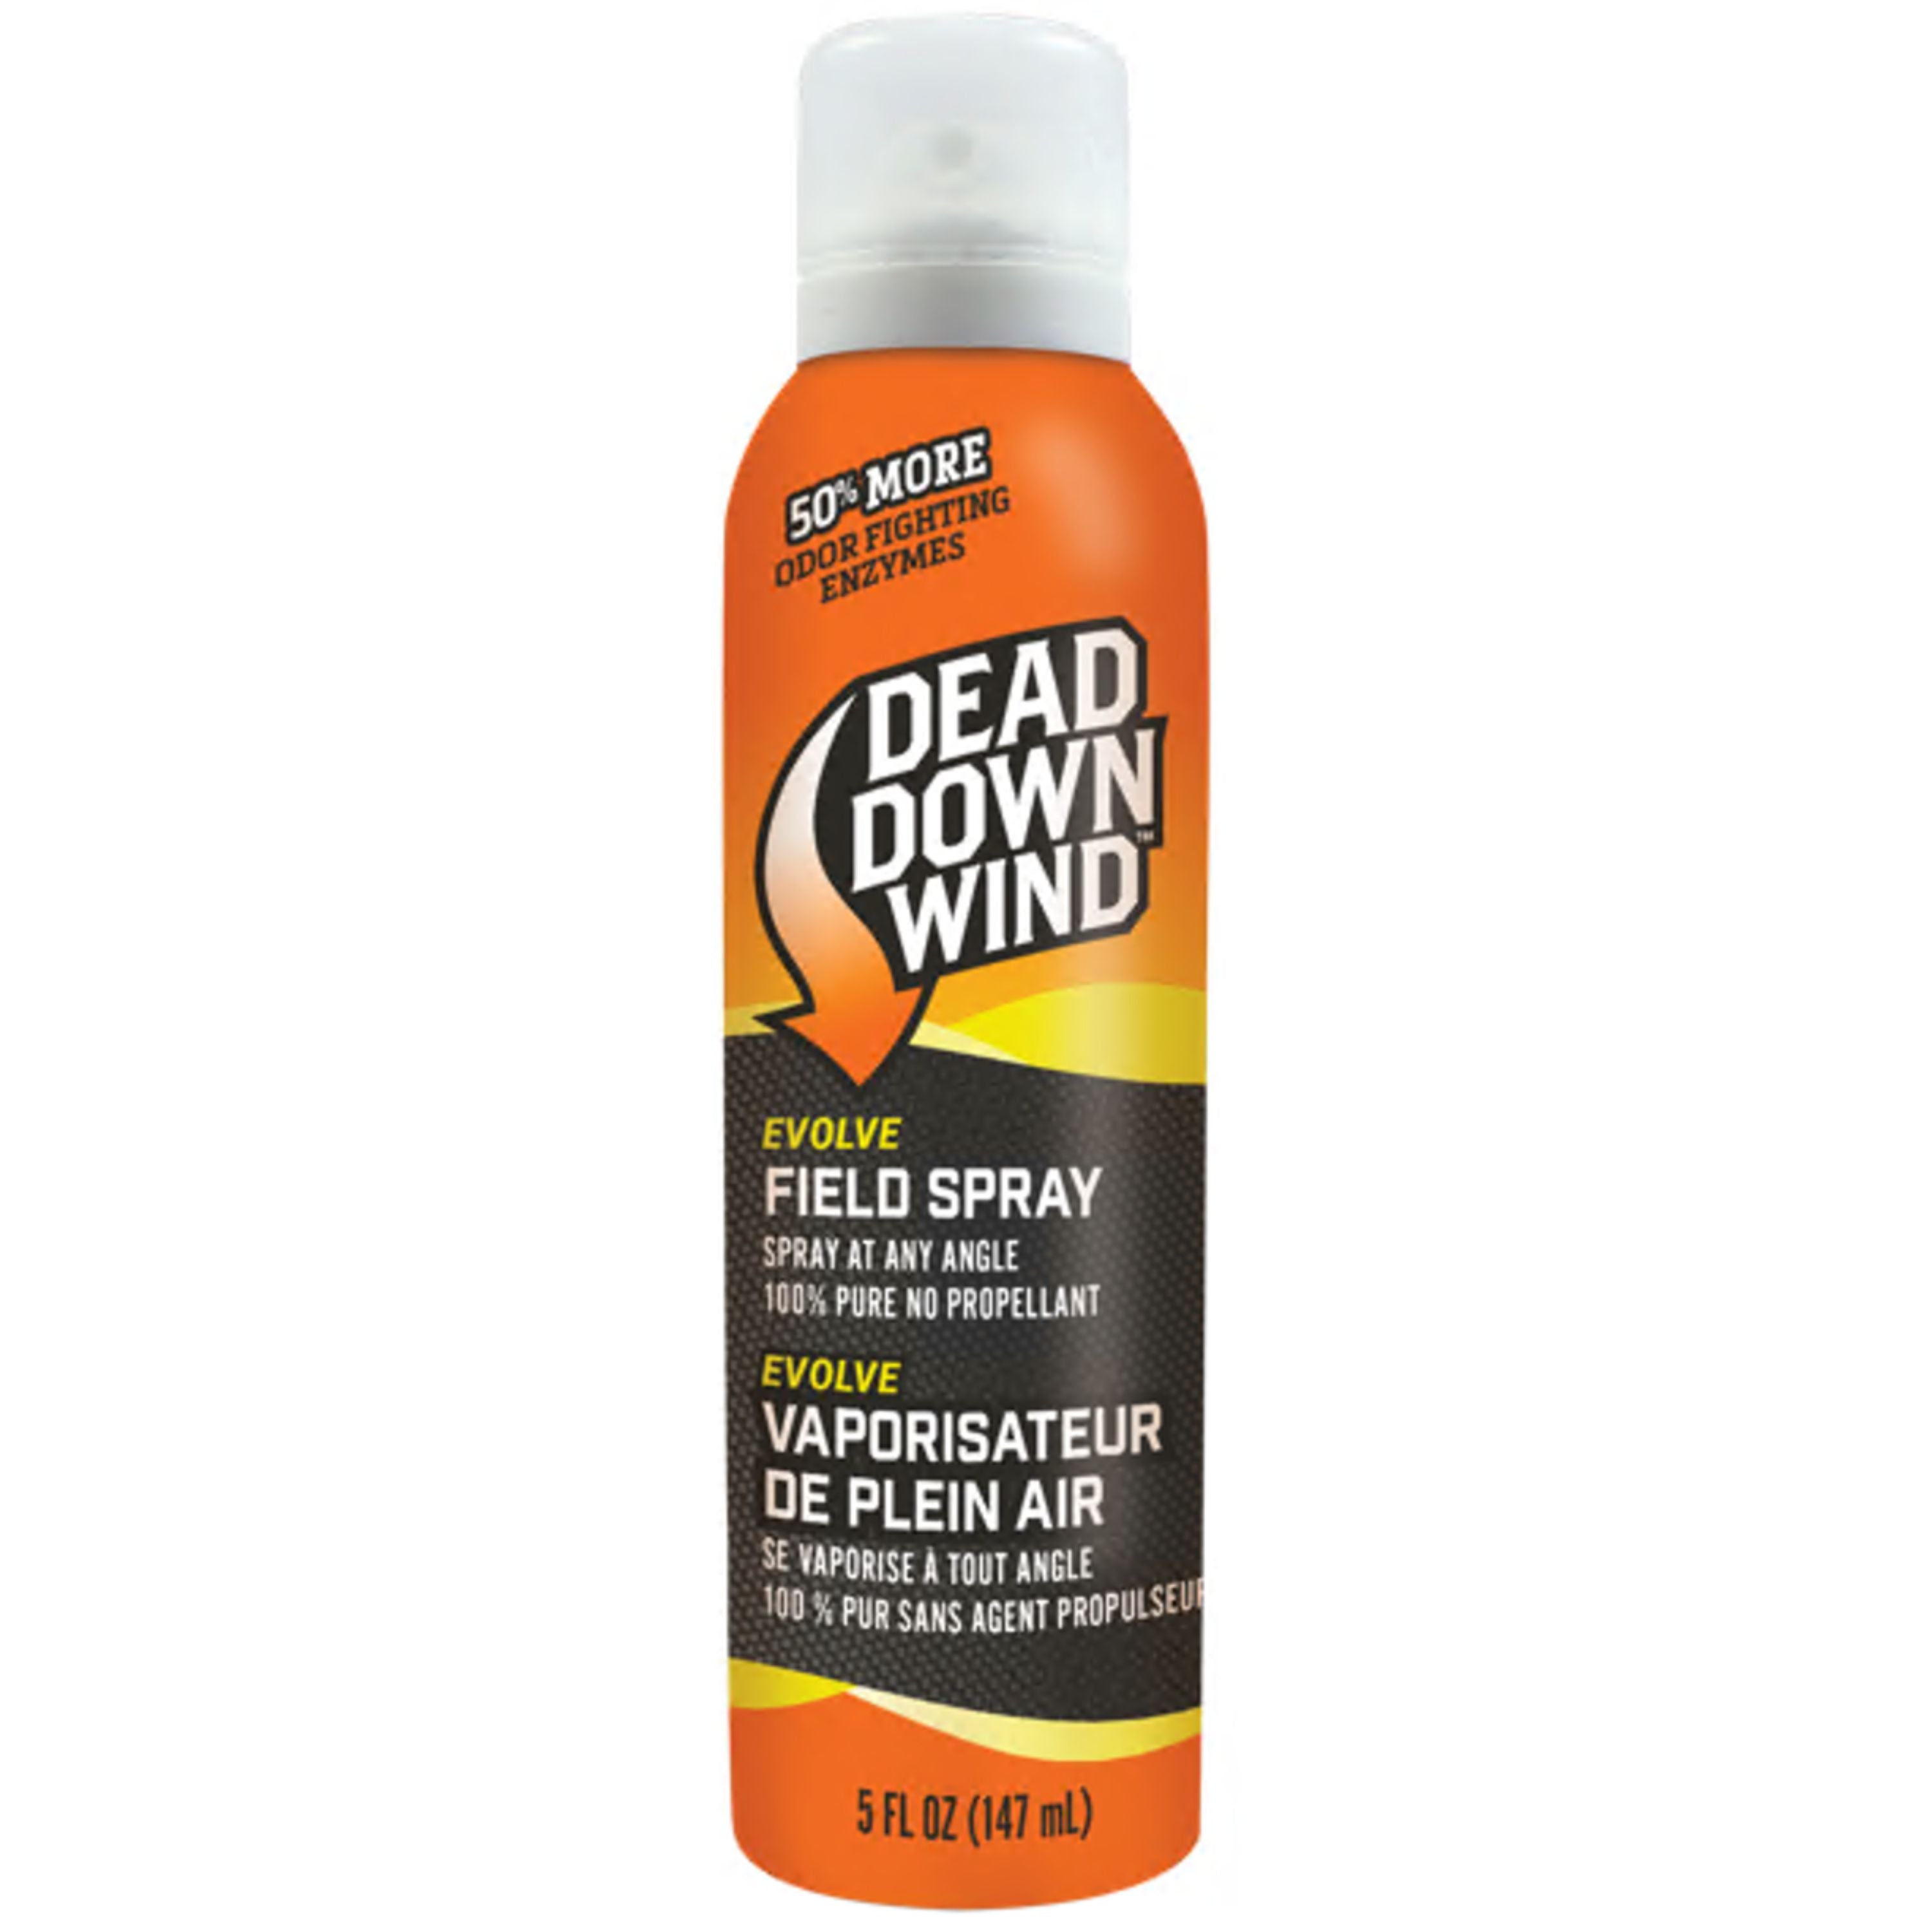 "Field spray" Odor eliminator spray can - Unscented